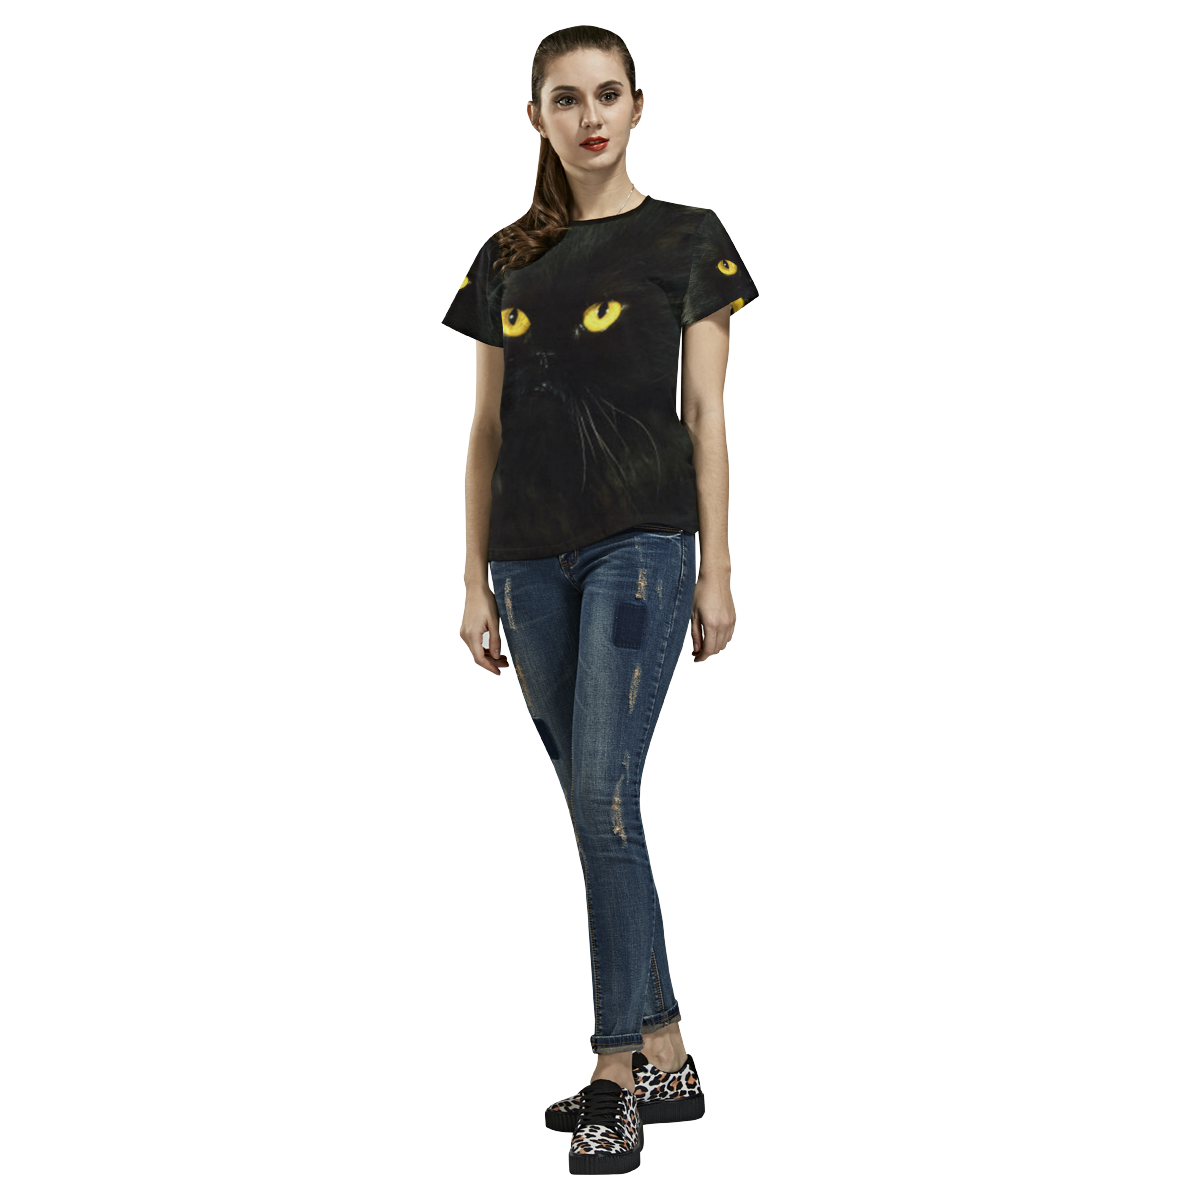 Black Cat All Over Print T-Shirt for Women (USA Size) (Model T40)